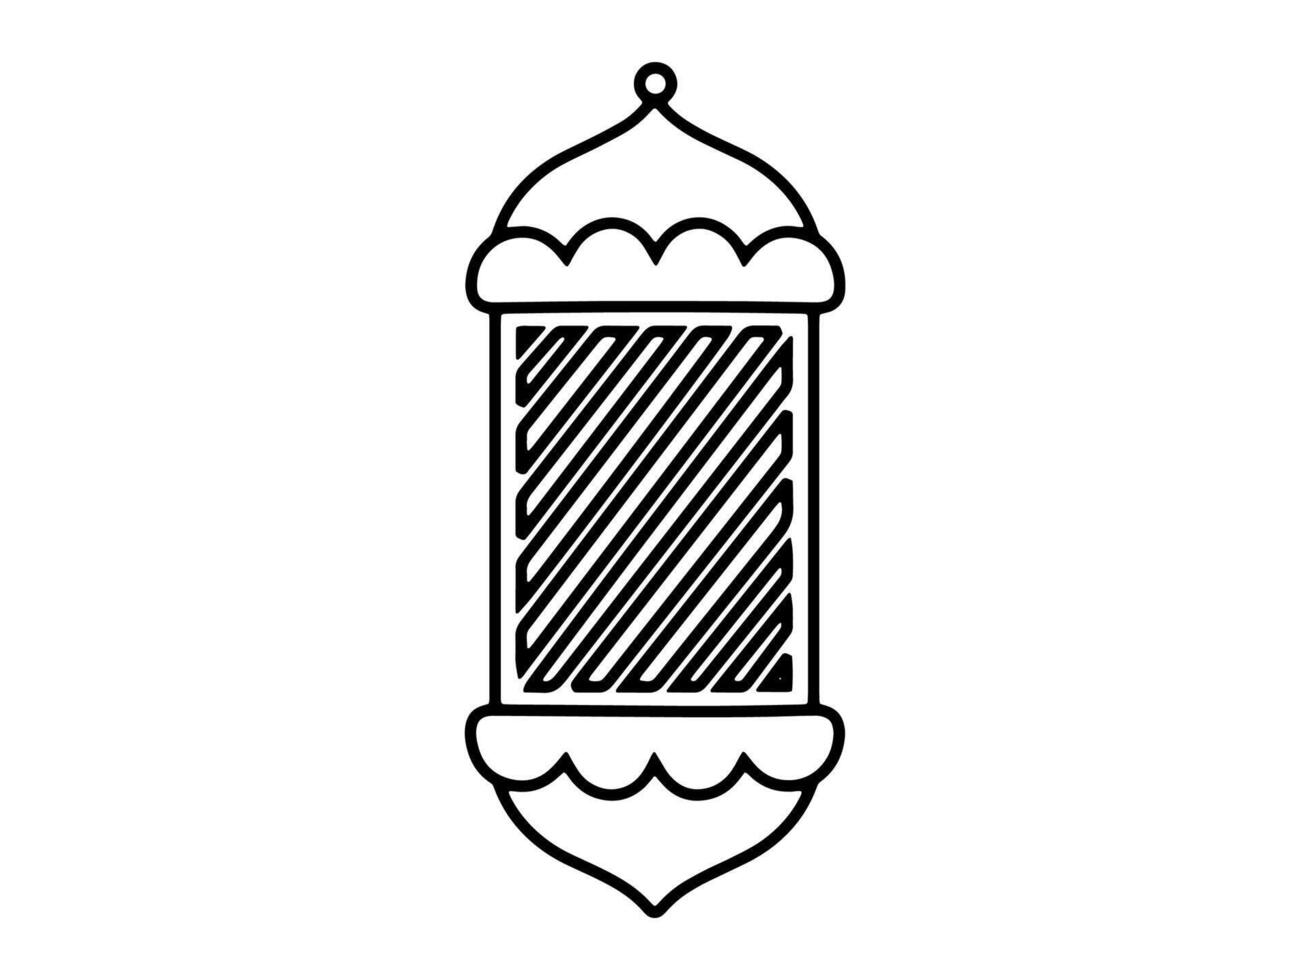 mano disegnato islamico Ramadhan mubarak lanterna vettore